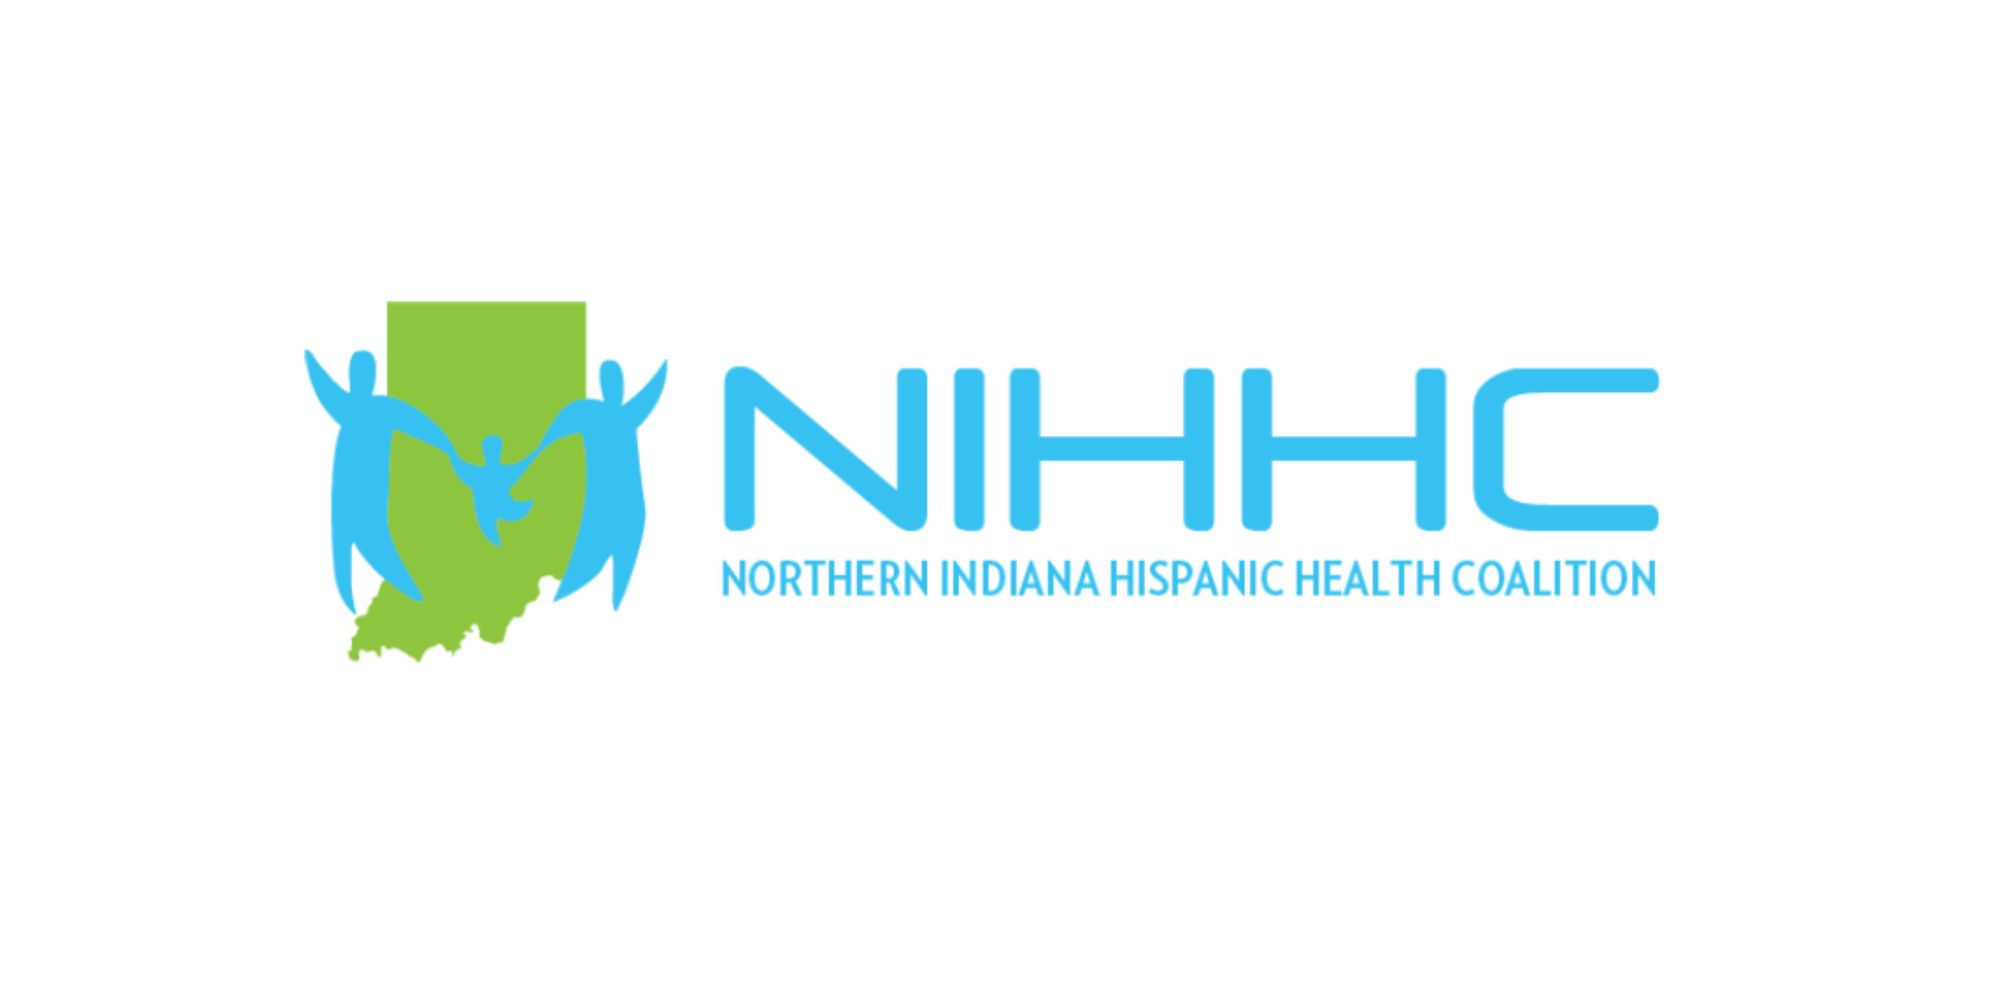 Northern Indiana Hispanic Health Coalition: Combating Childhood Obesity through Healthy Hearts Program